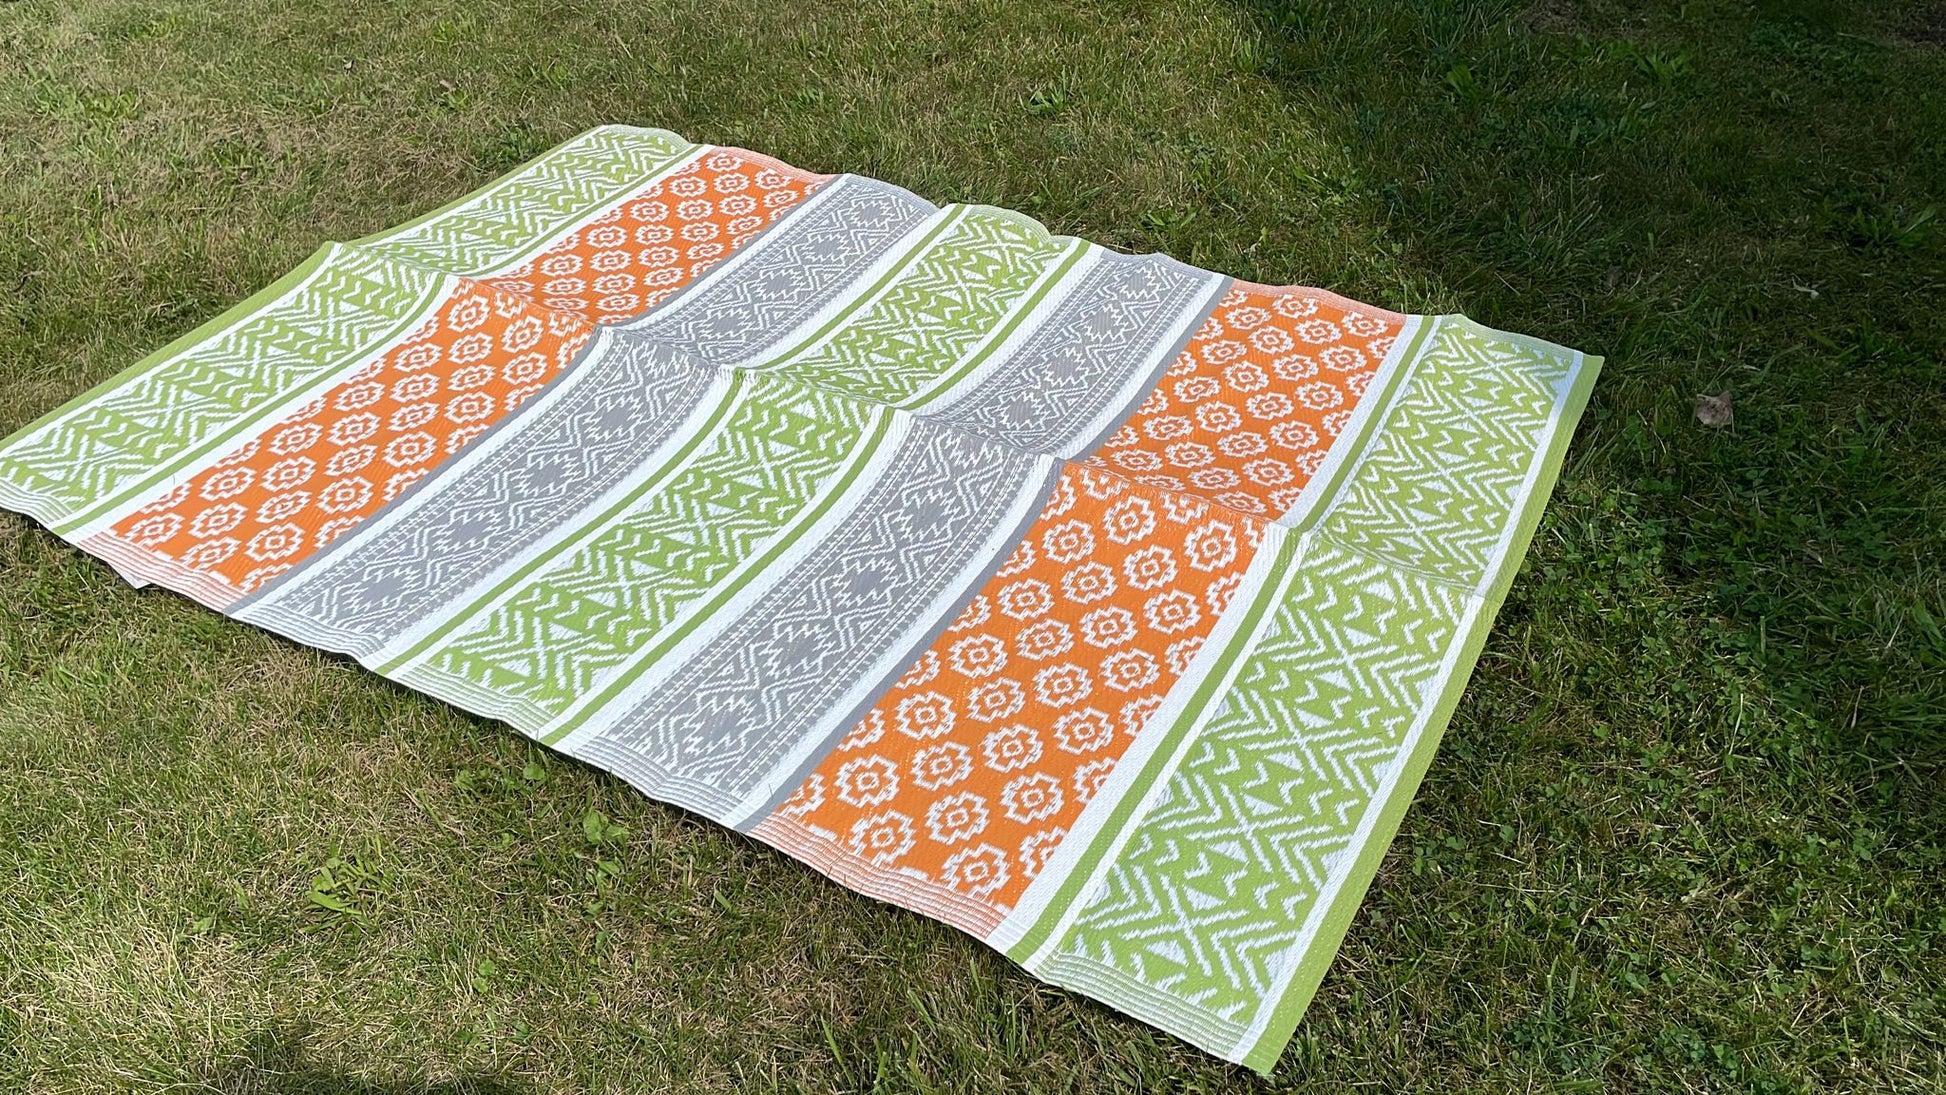 BalajeesUSA Outdoor rug Plastic straw patio rugs-6 by 9 feet Blue